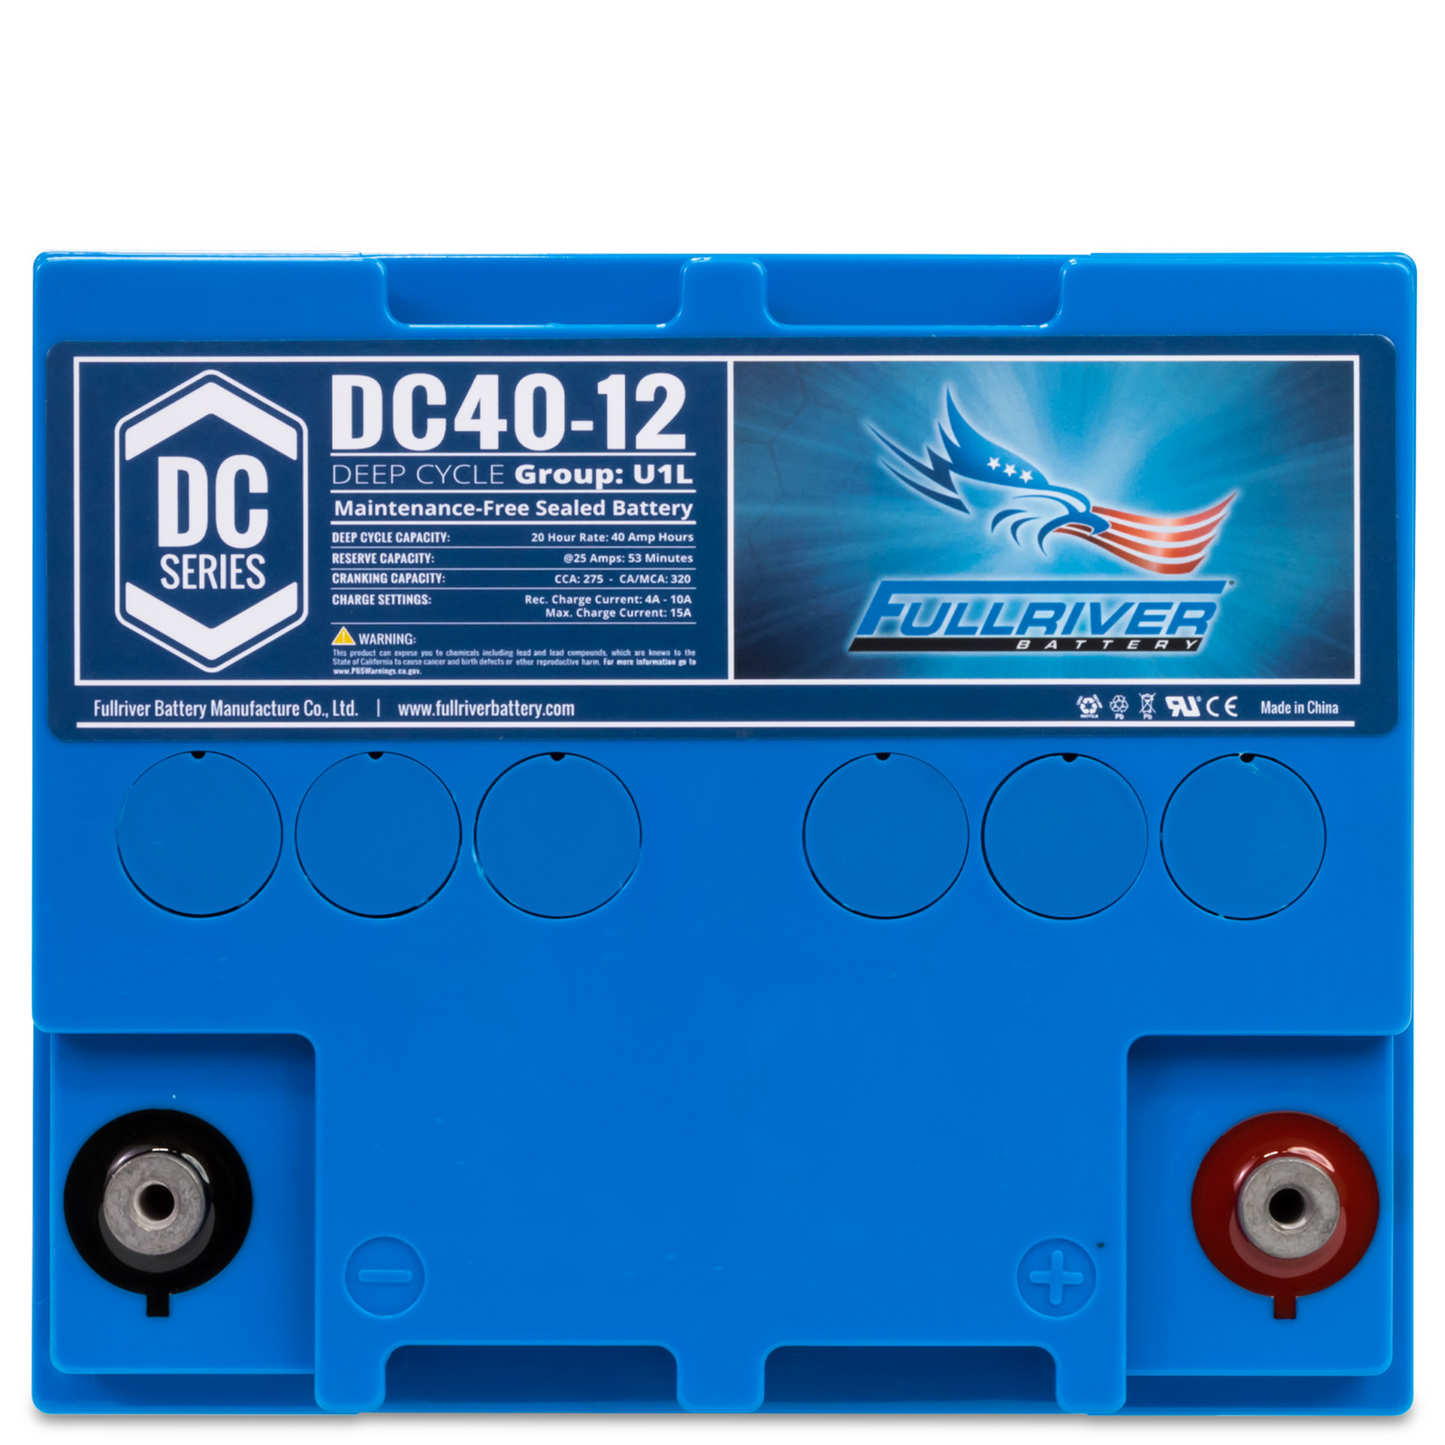 DC Series Battery 12V 40Ah (DC40-12)